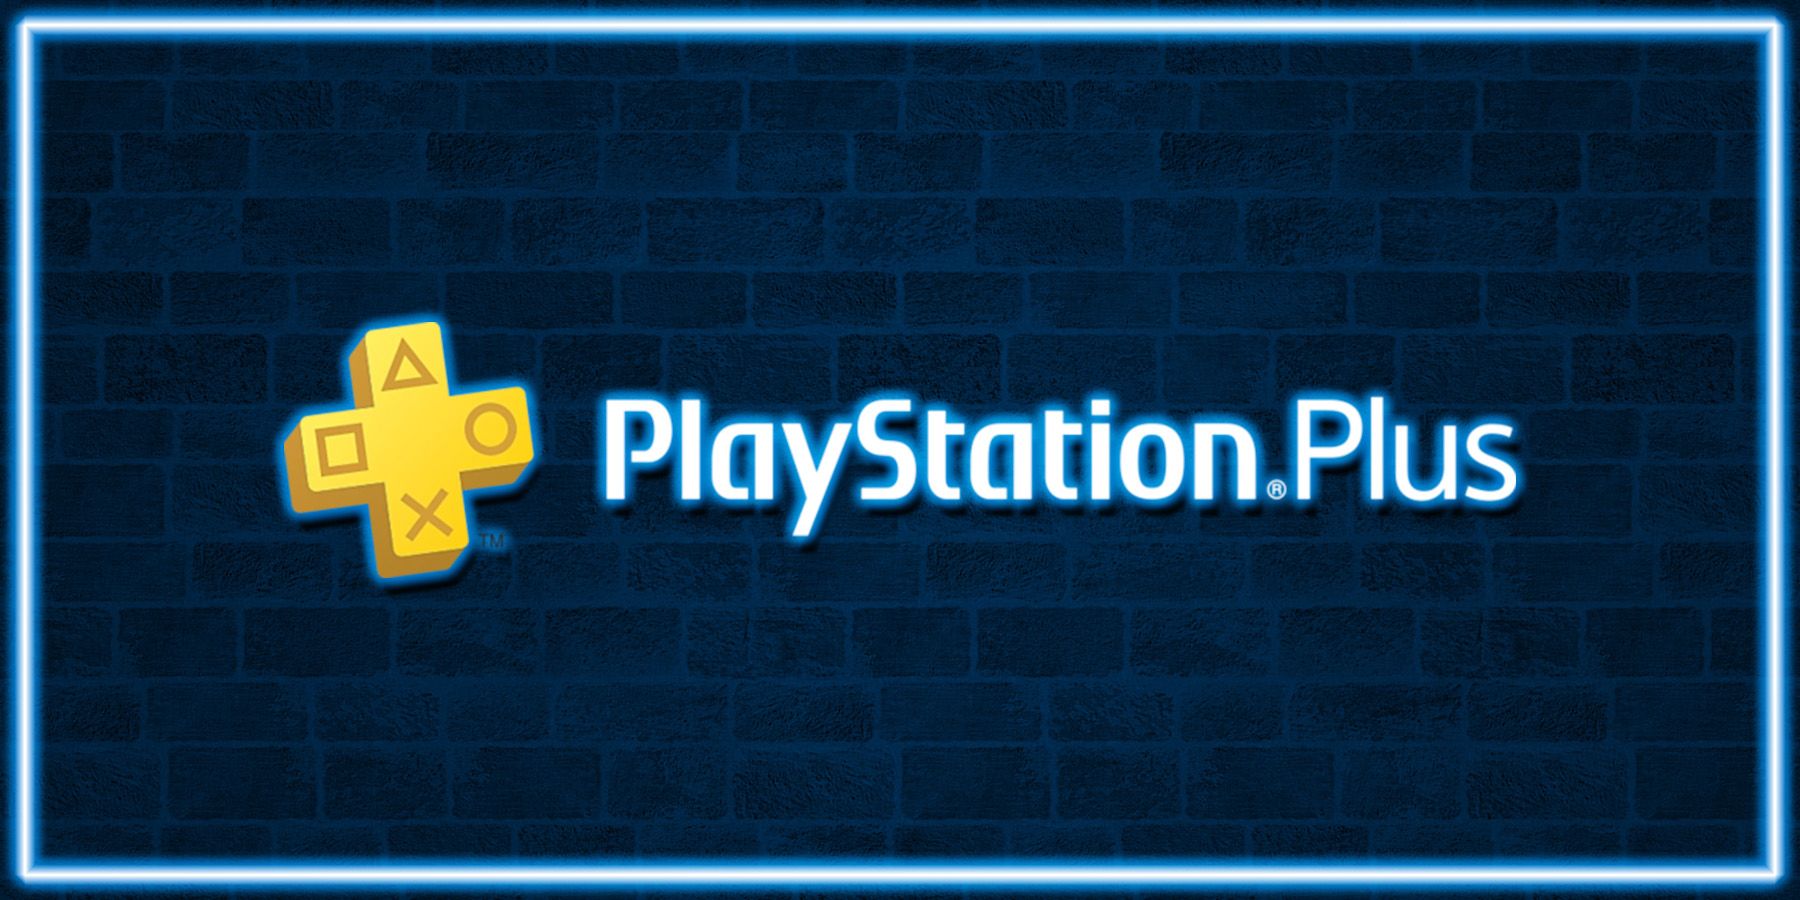 PlayStation Plus PS Plus glowing logo on blue neon lit brick wall